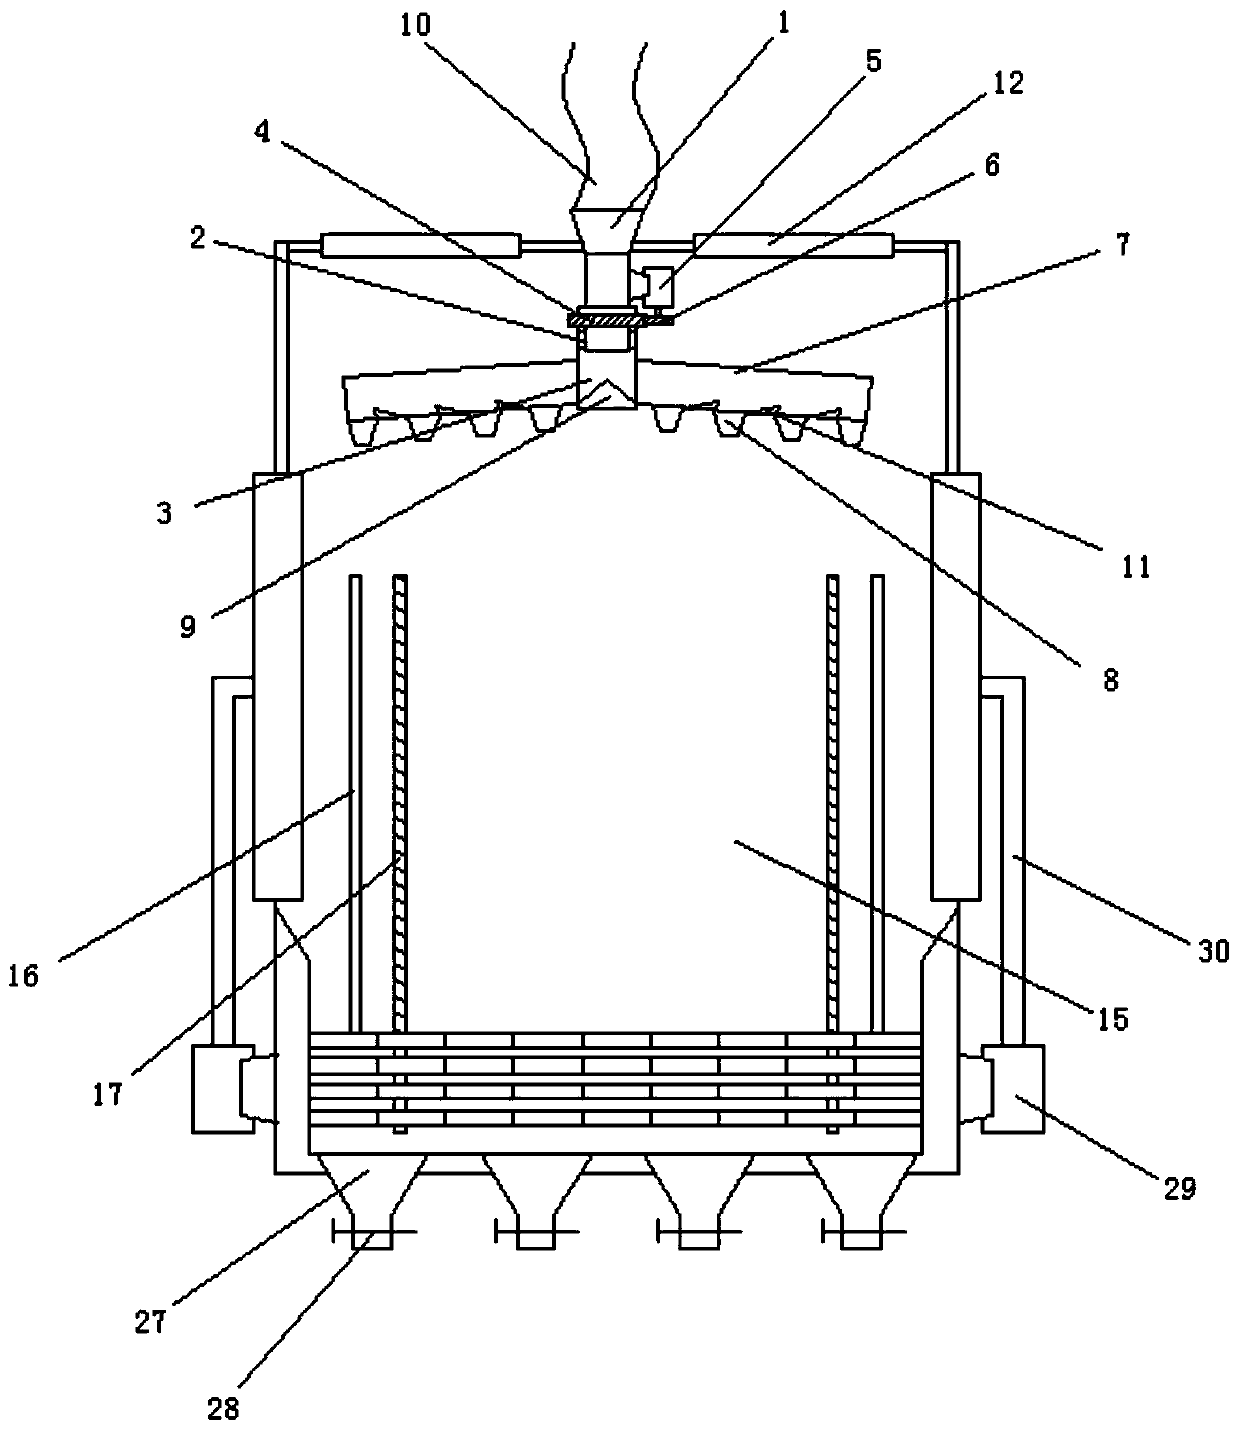 Grain rotary discharging type drying device